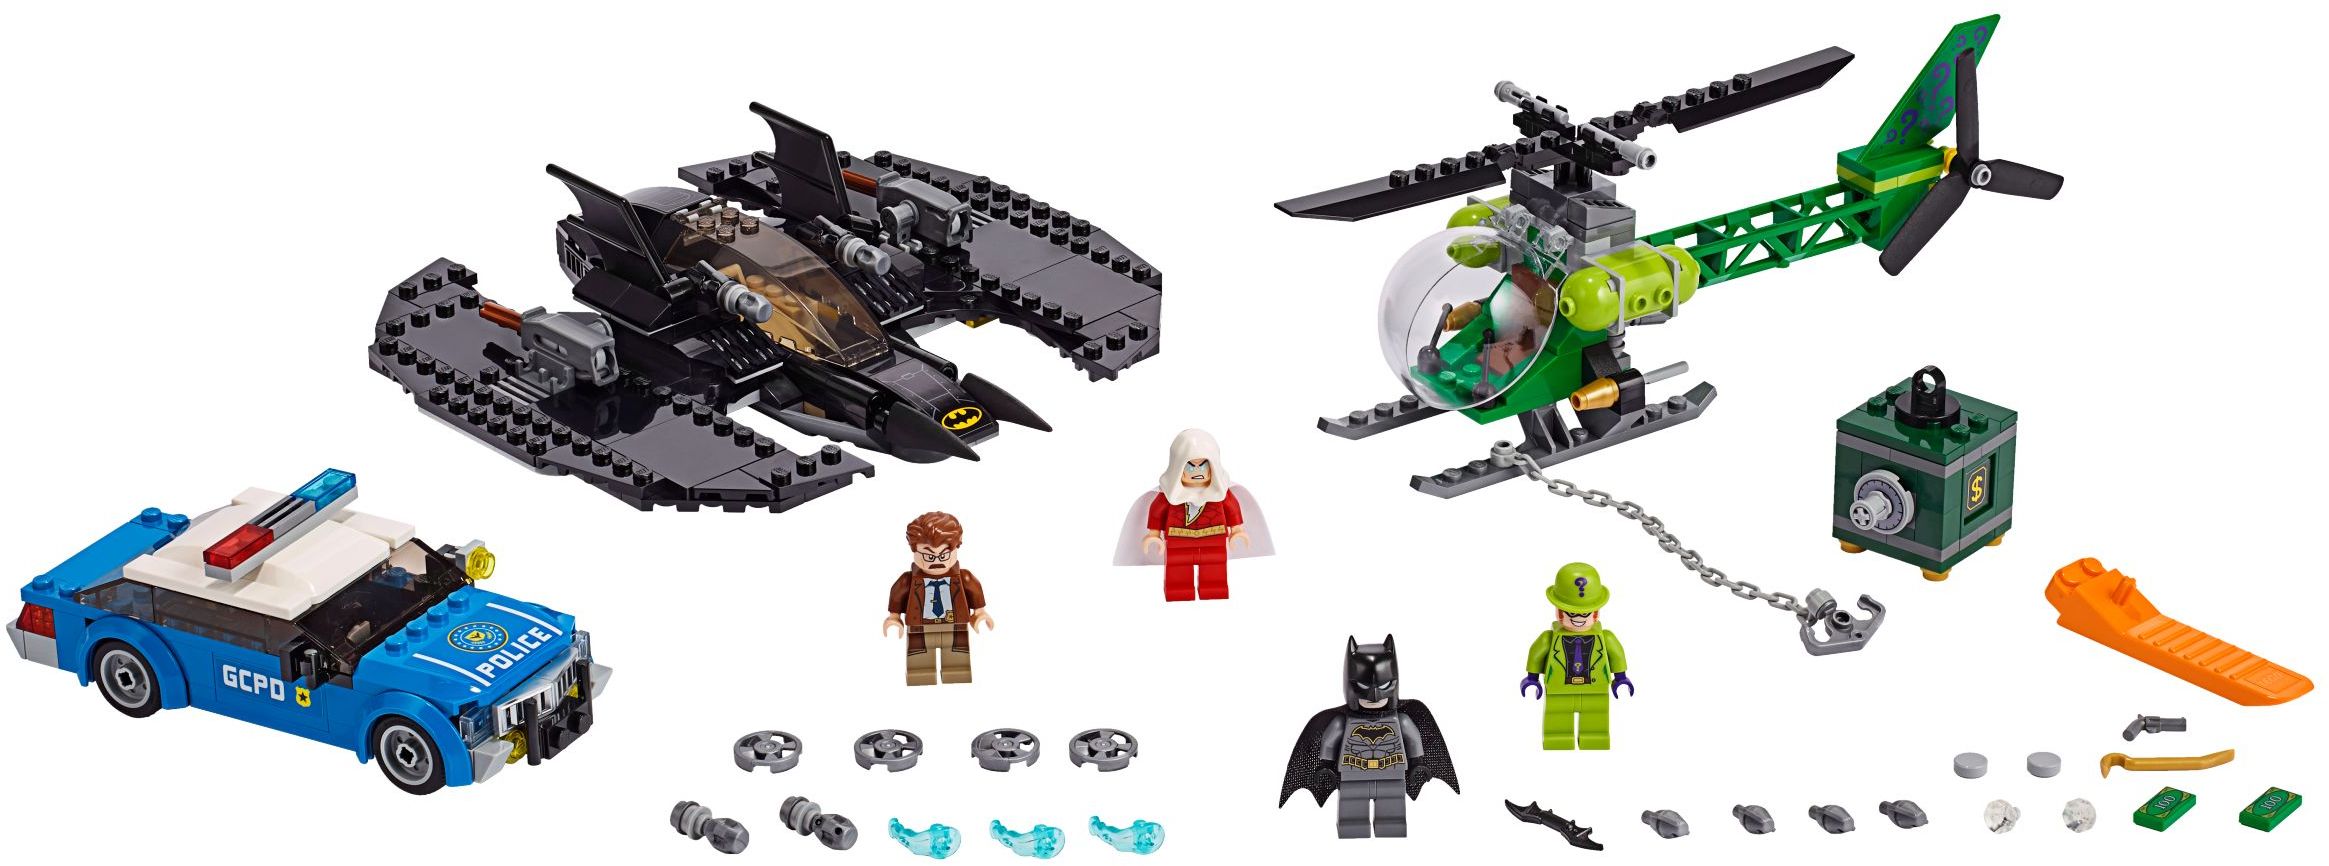 LEGO Set 40433-1 1989 Batmobile - Limited Edition (2019 Super Heroes DC >  Batman)